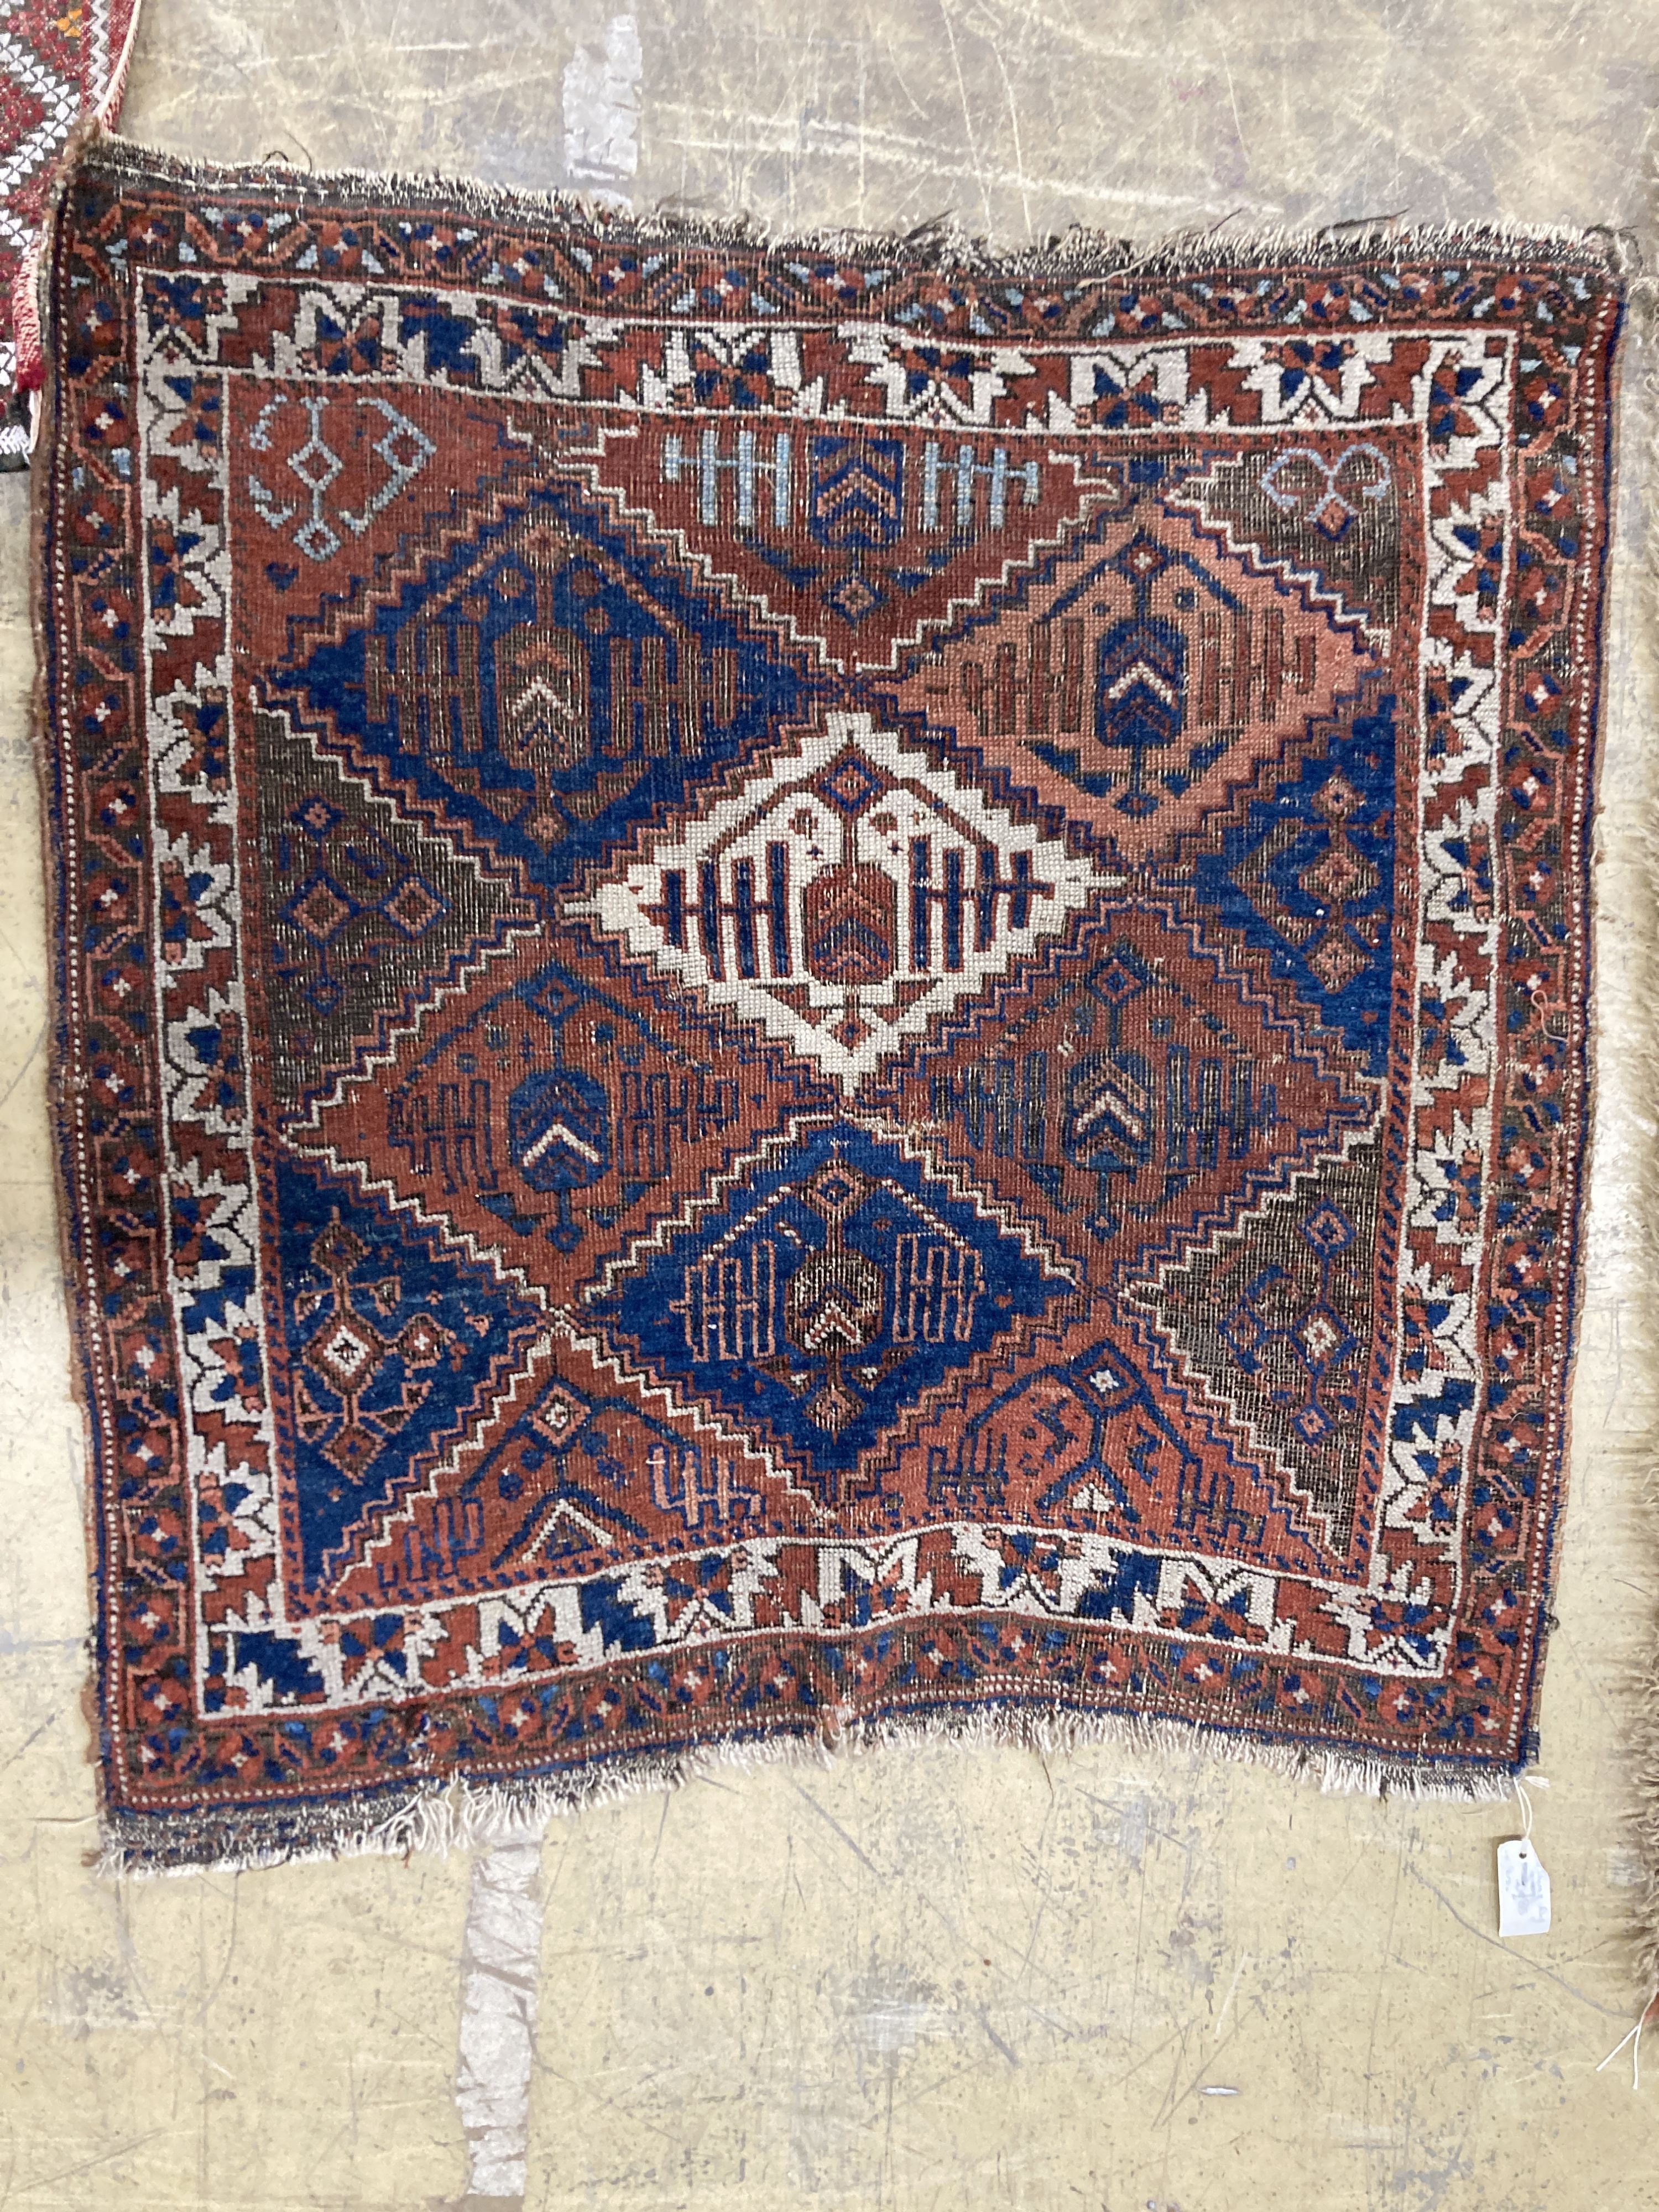 An antique Caucasian red ground rug, 250 x 125 cm and a smaller Shiraz rug.